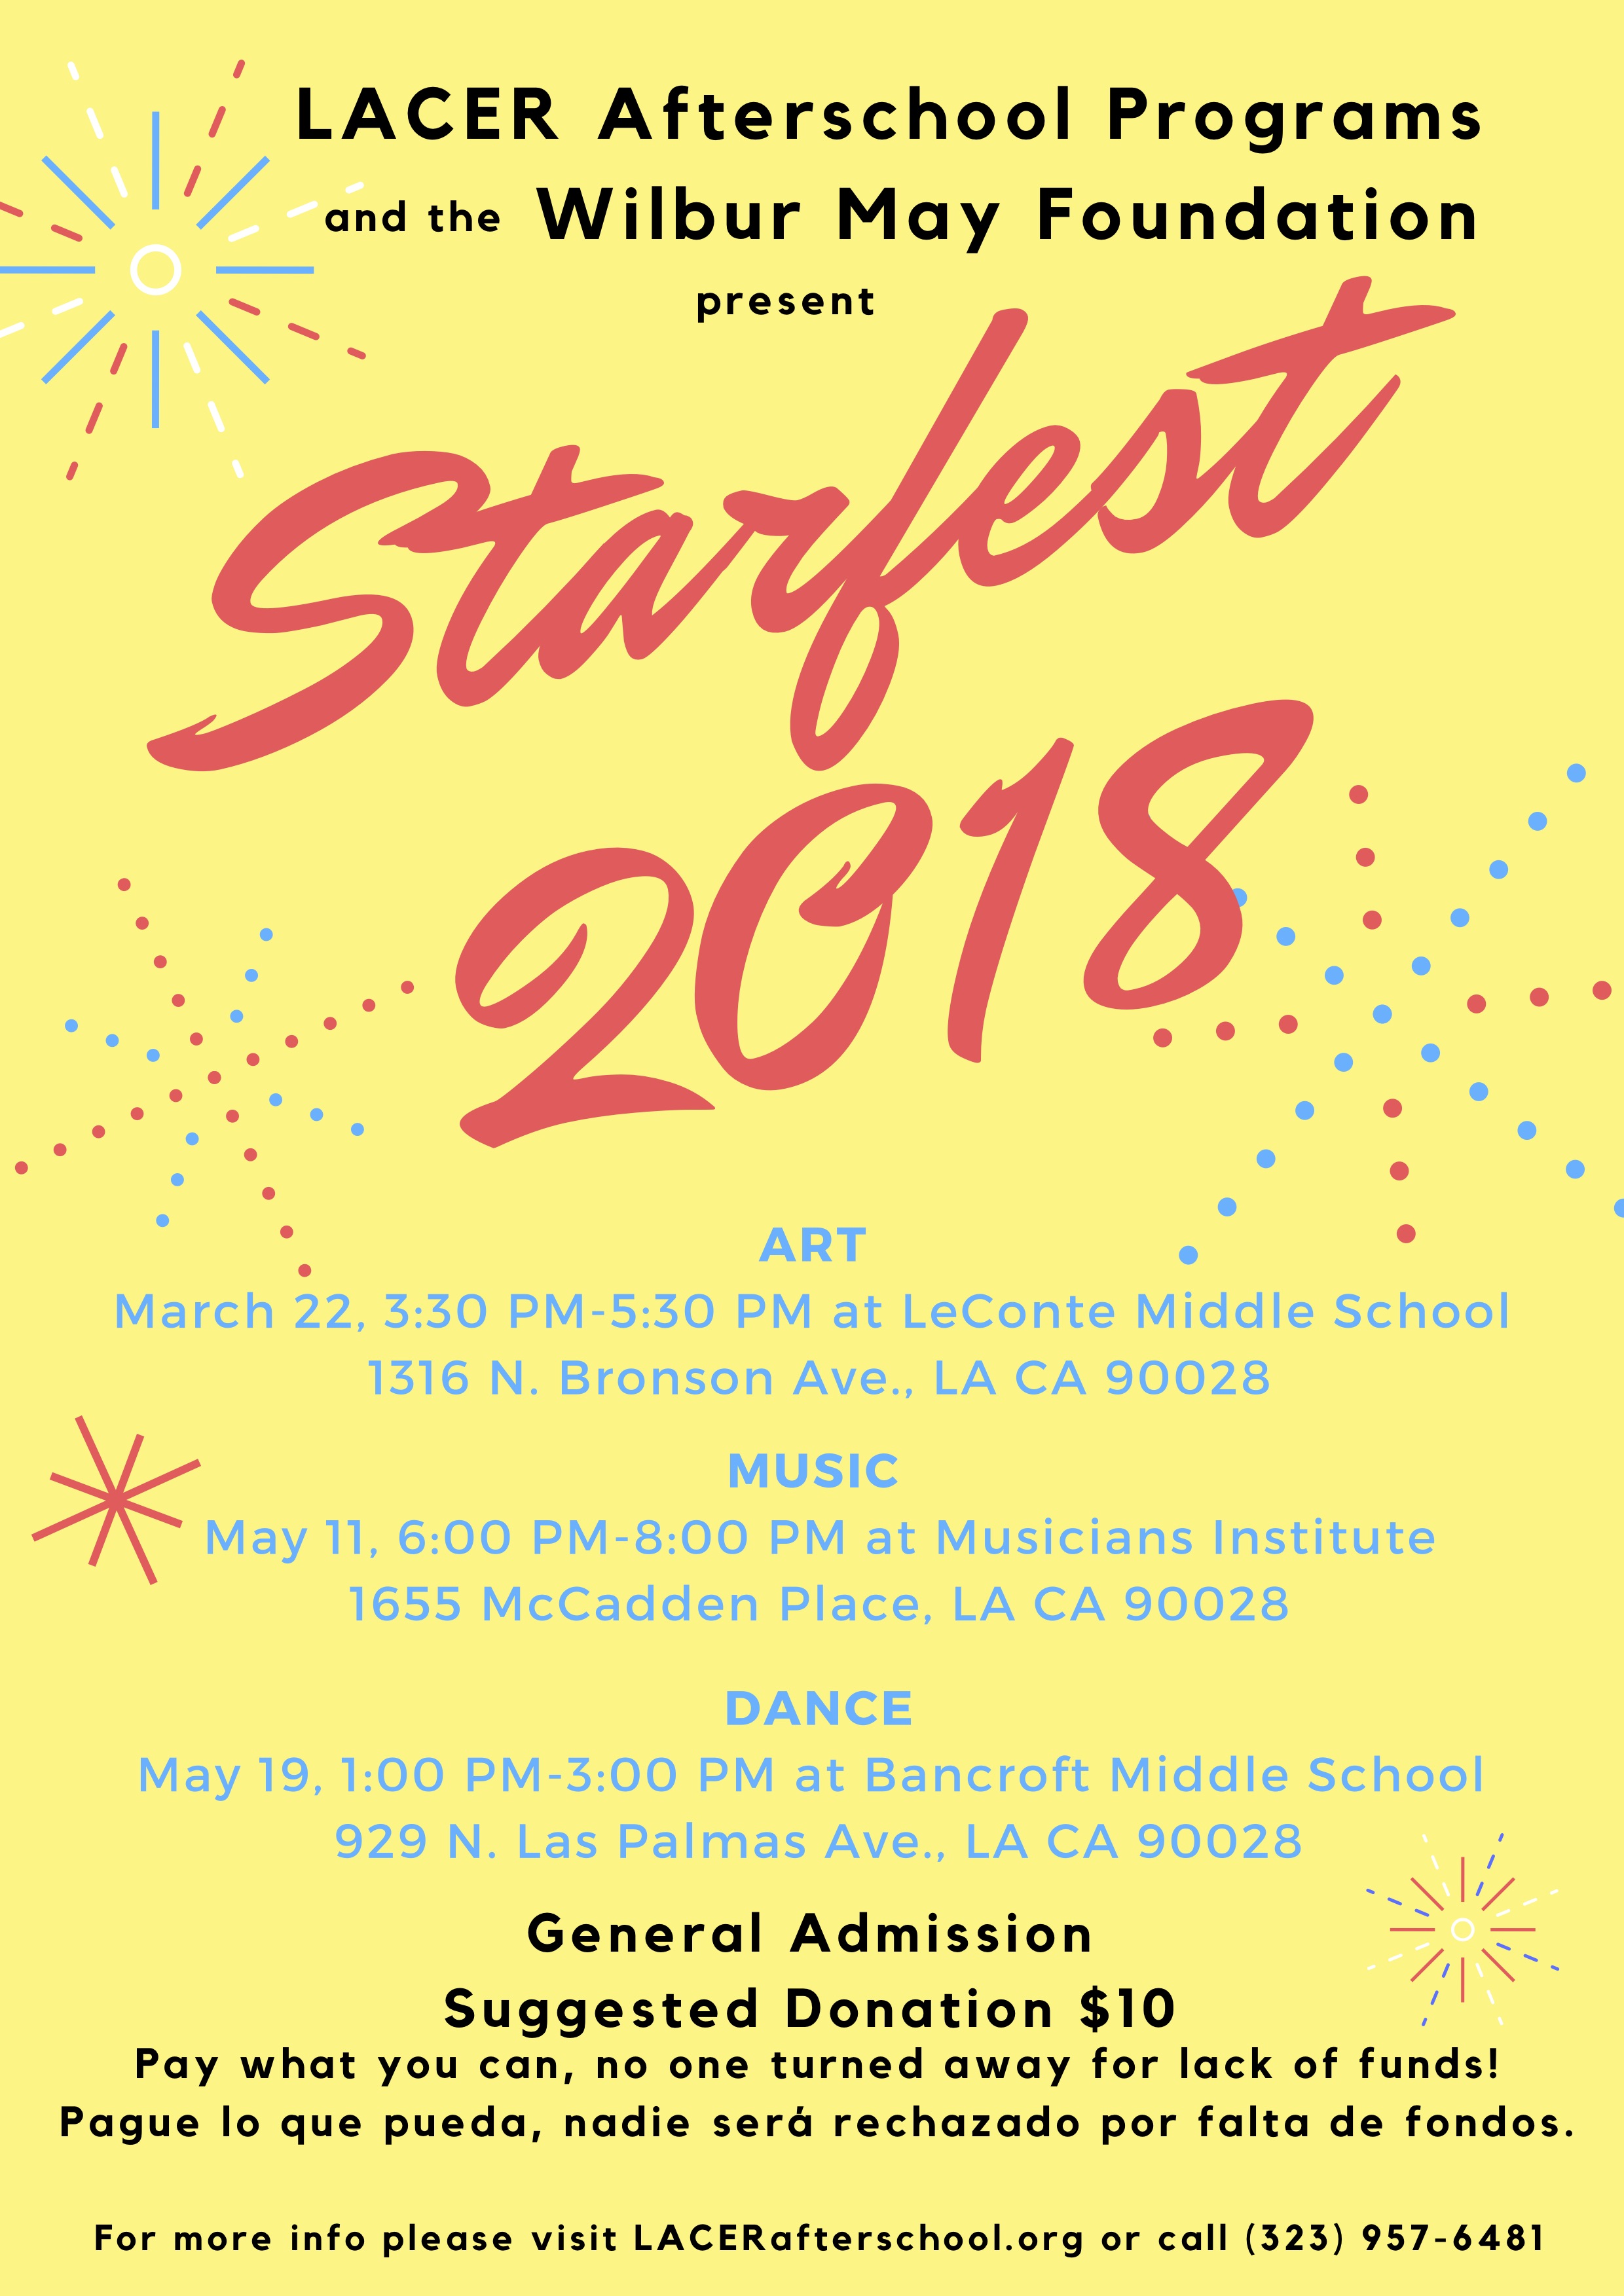 Starfest season 2018 poster FINAL.jpg